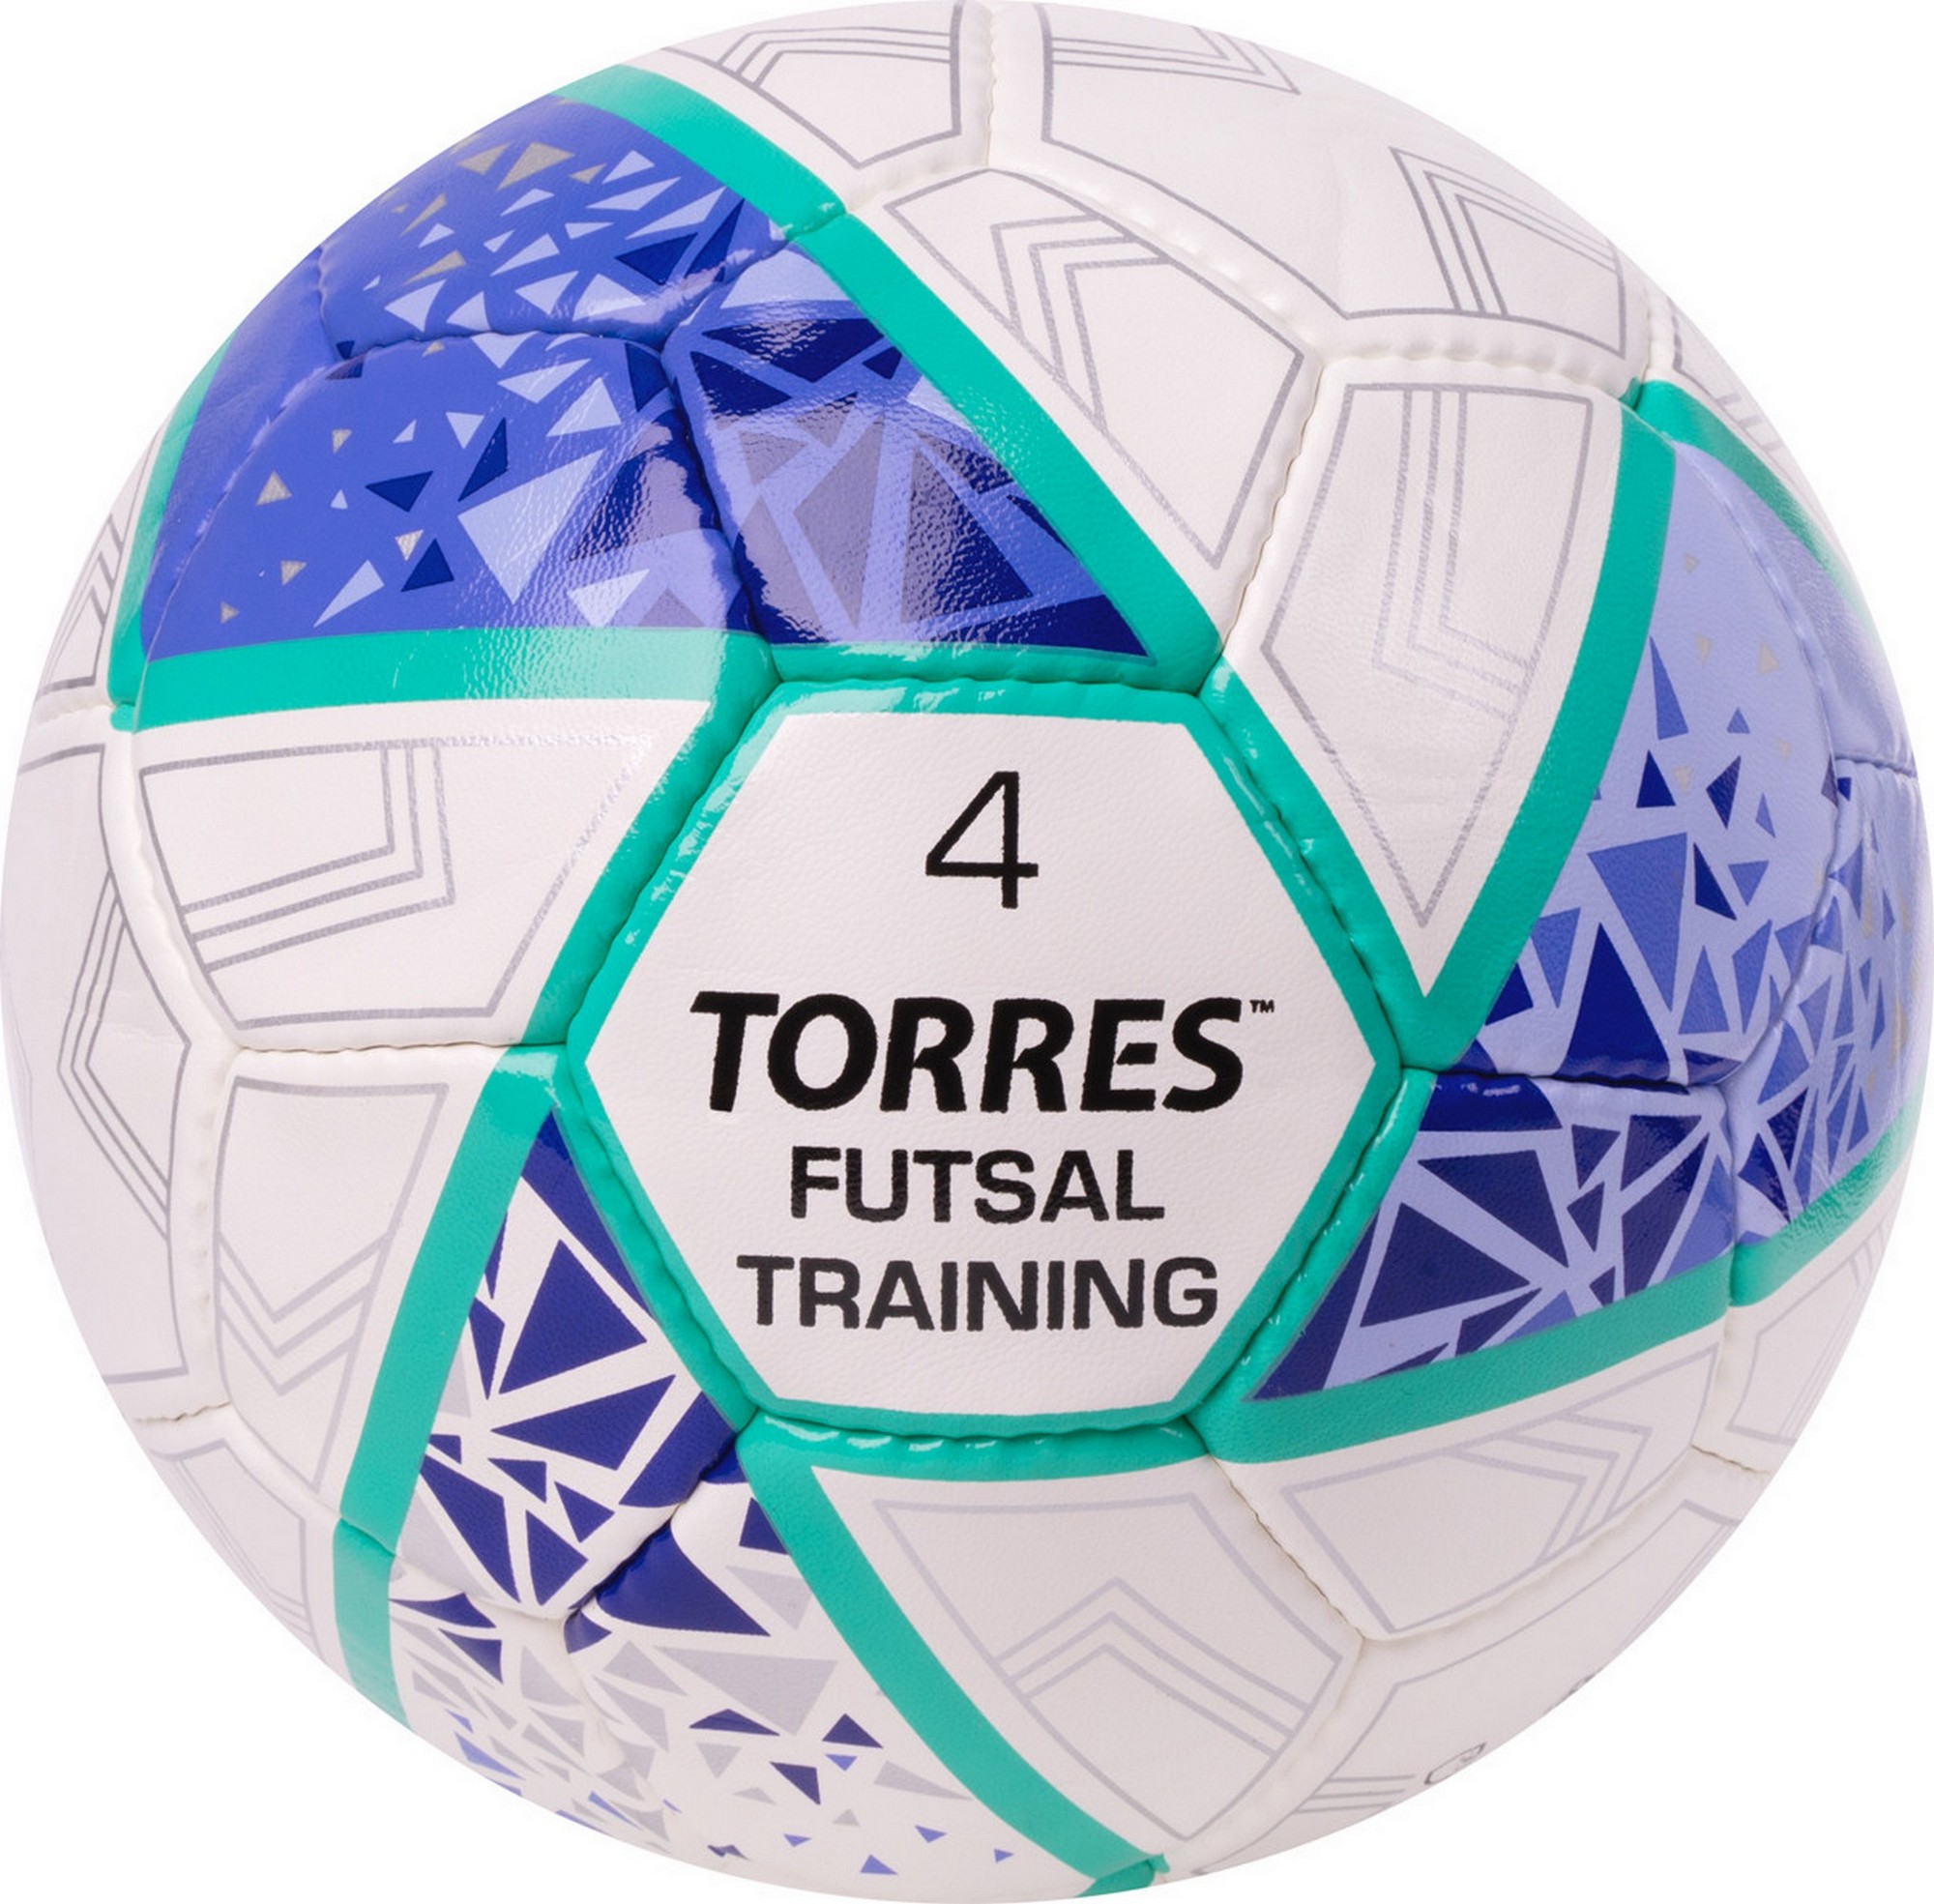   Torres Futsal Training FS323674 .4